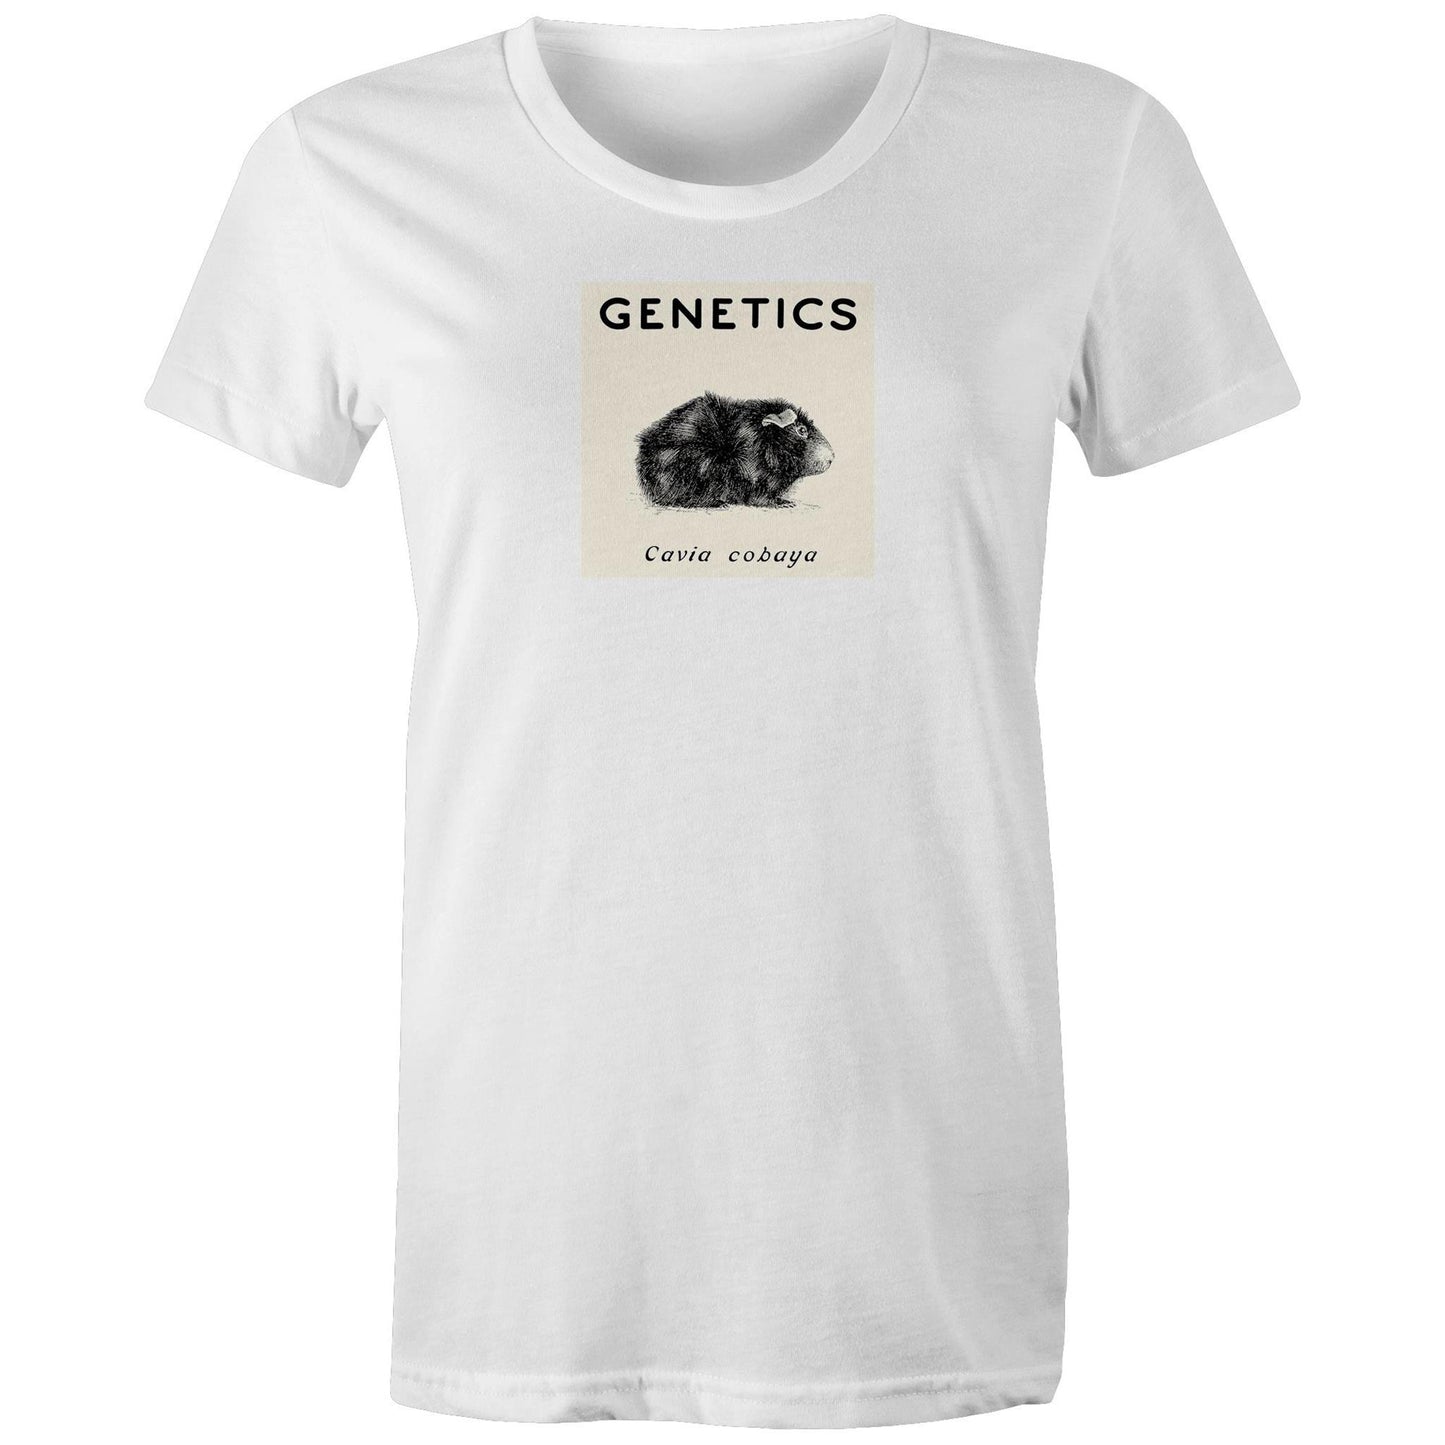 Genetics T Shirts for Women